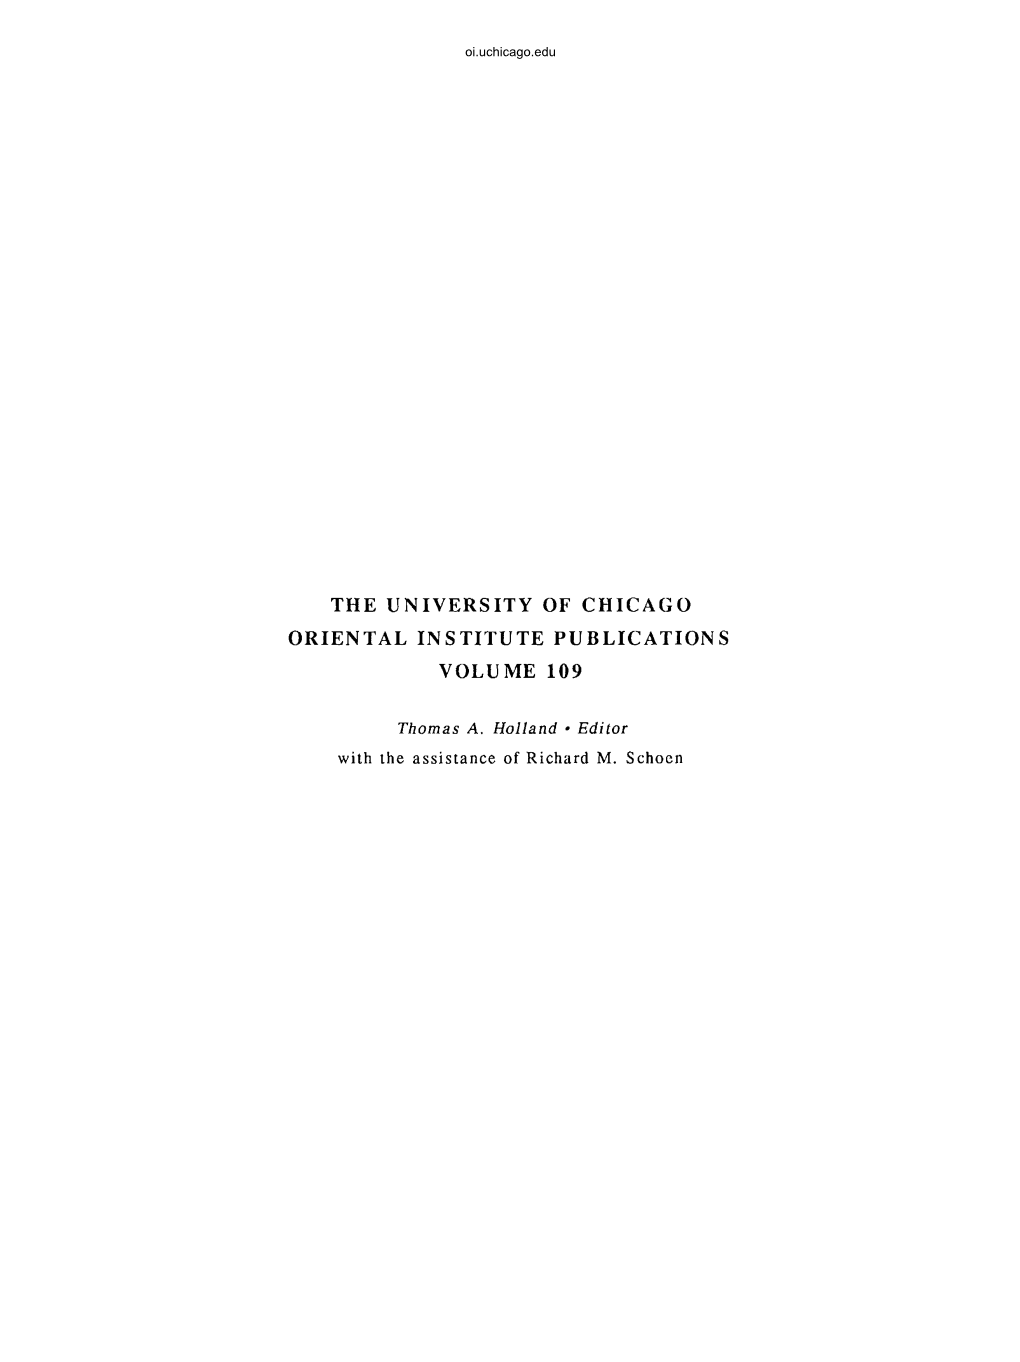 The University of Chicago Oriental Institute Publications Volume 109